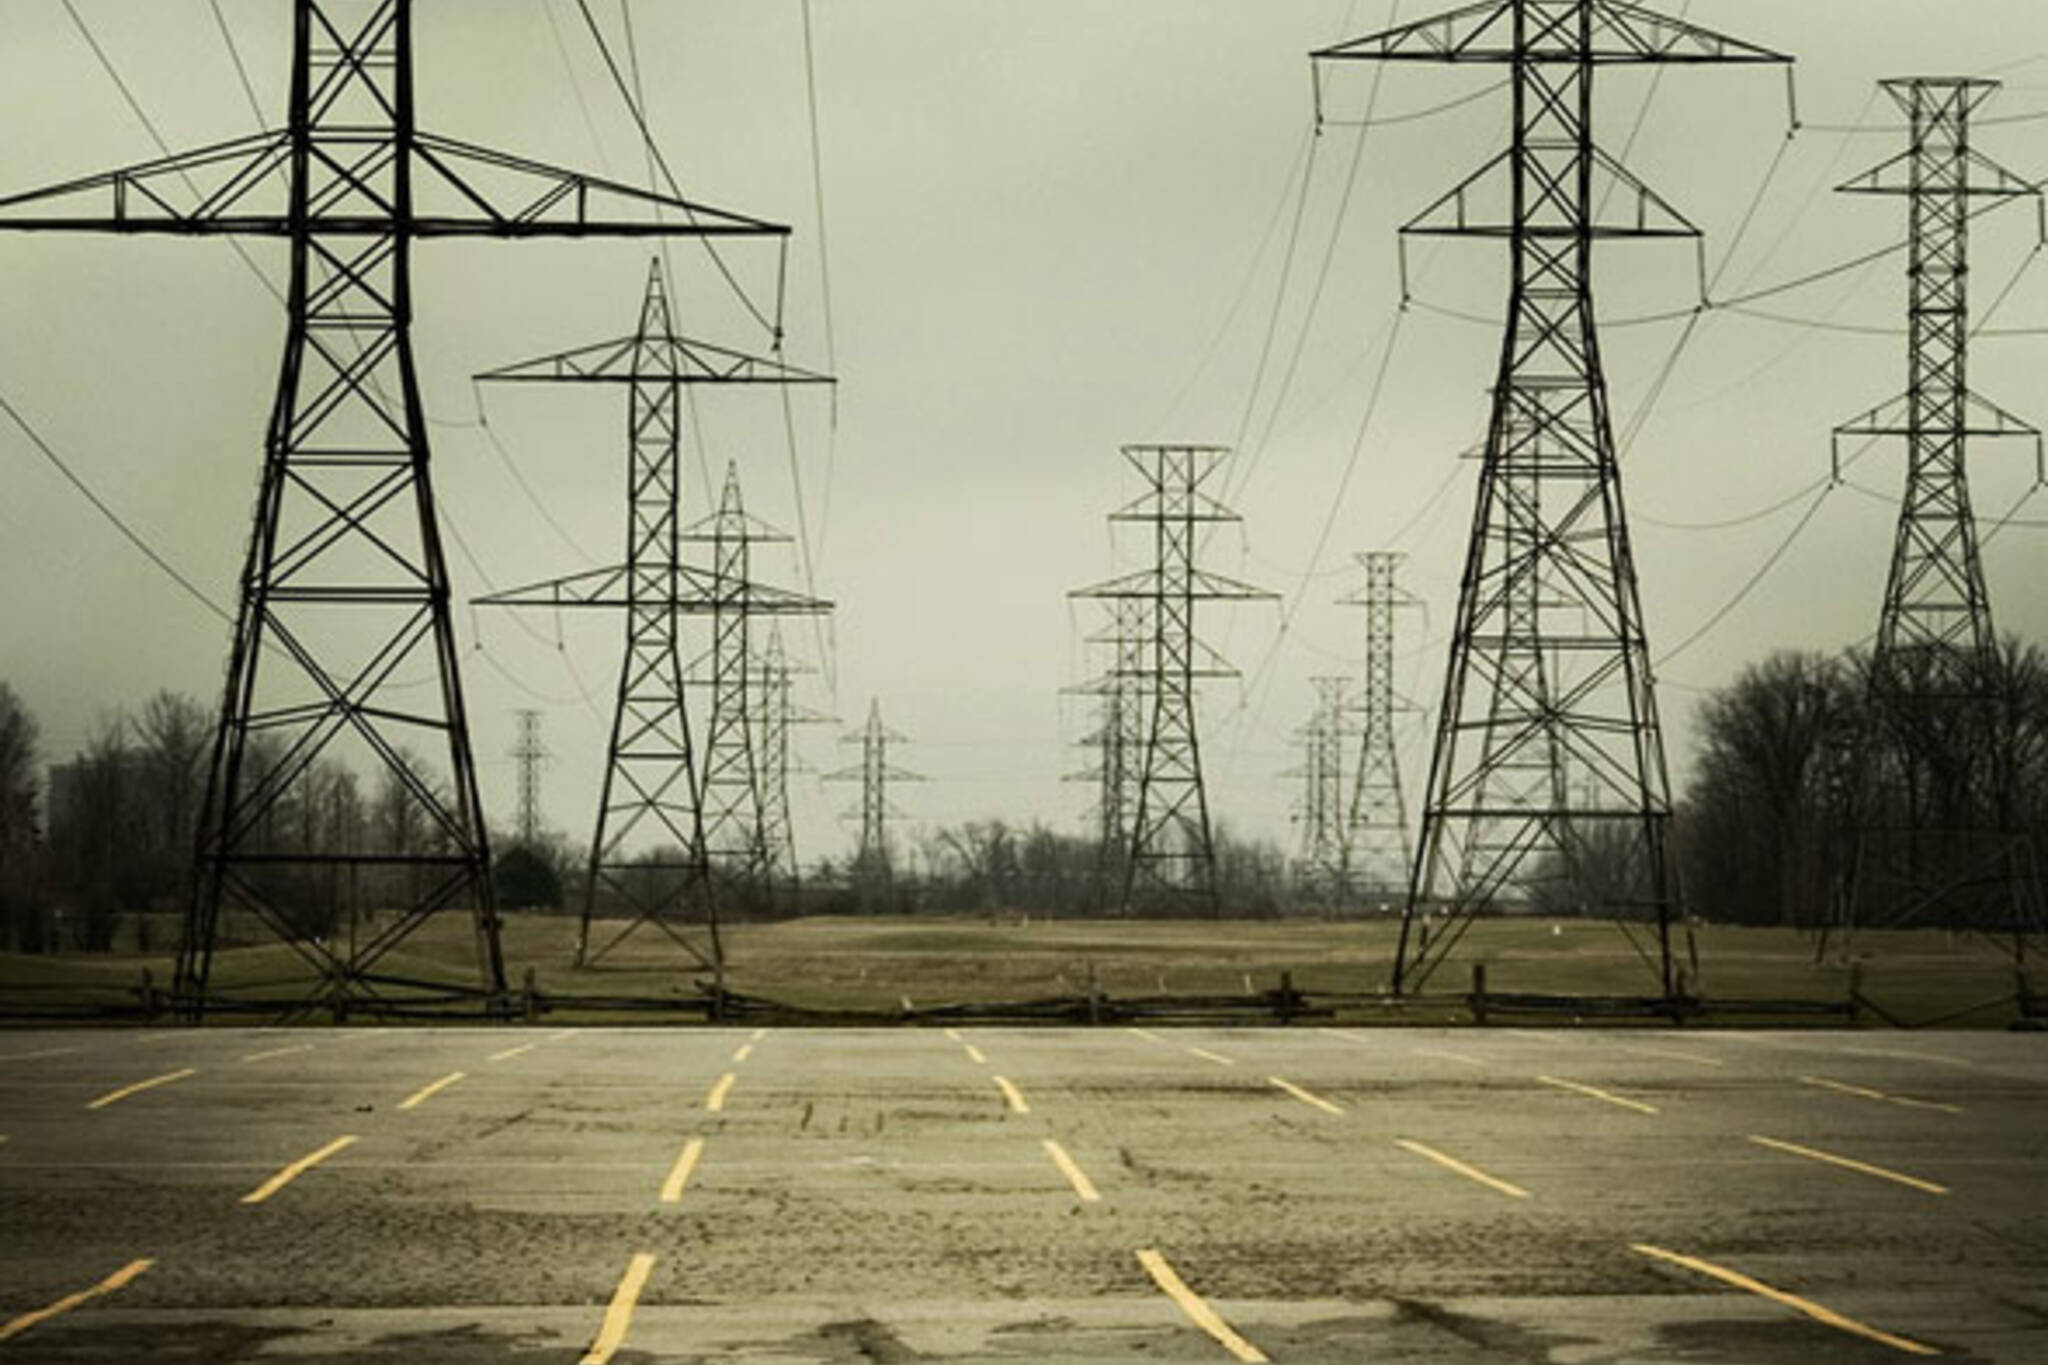 Jerrold Litwinenko power grid photo essay